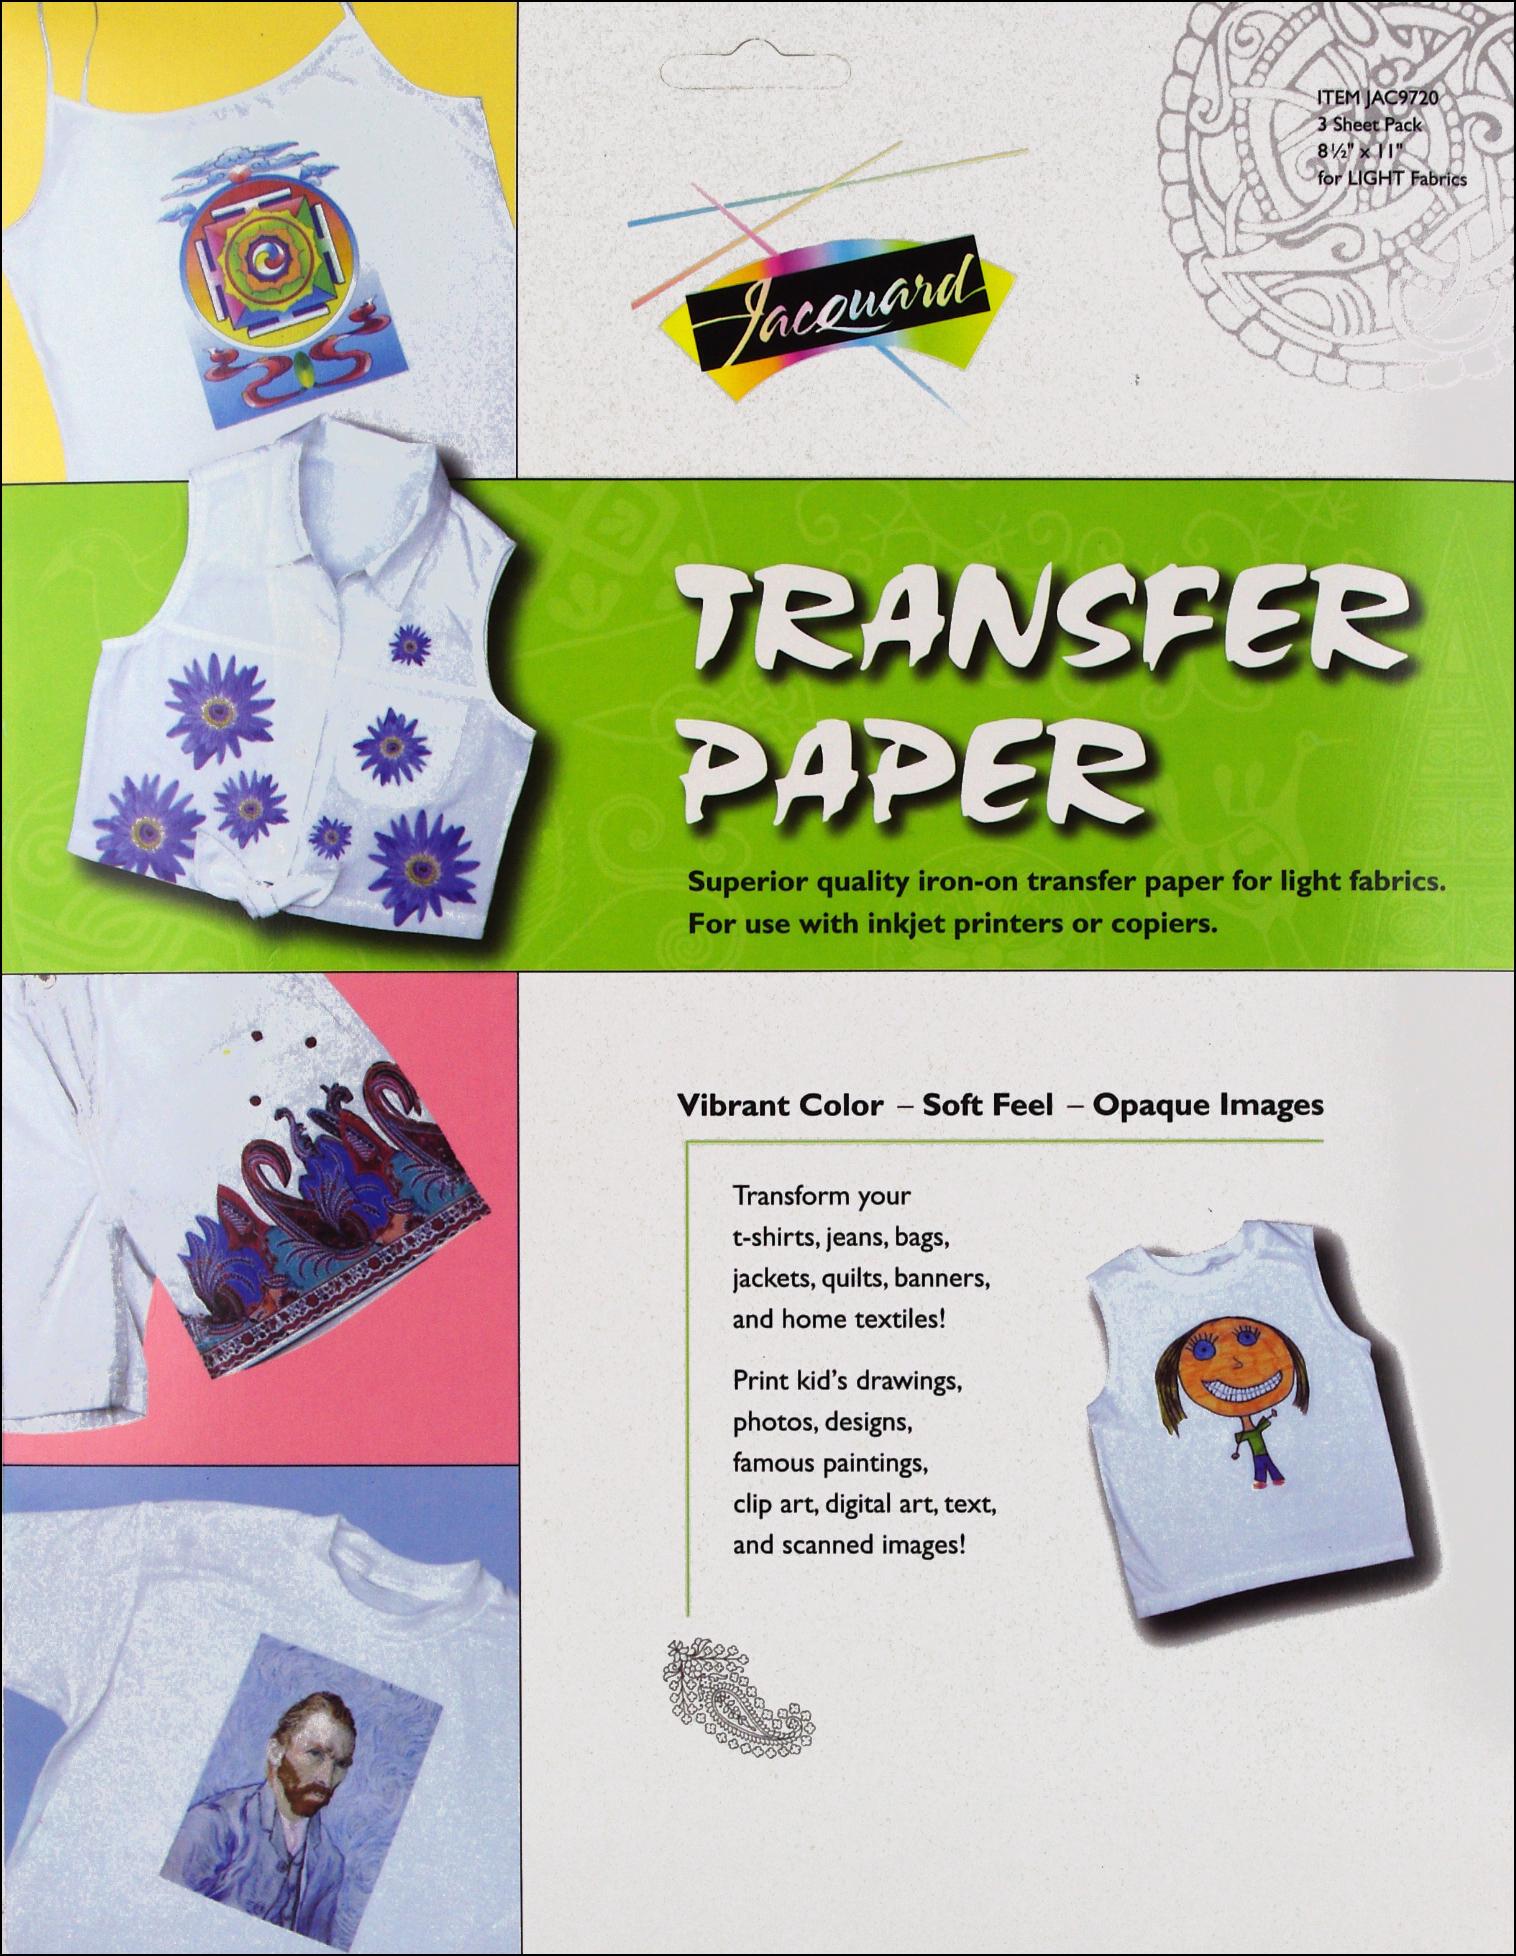 Jacquard Dark Fabric 8.5 x 11 Iron-On Transfer Paper, 3 Sheets